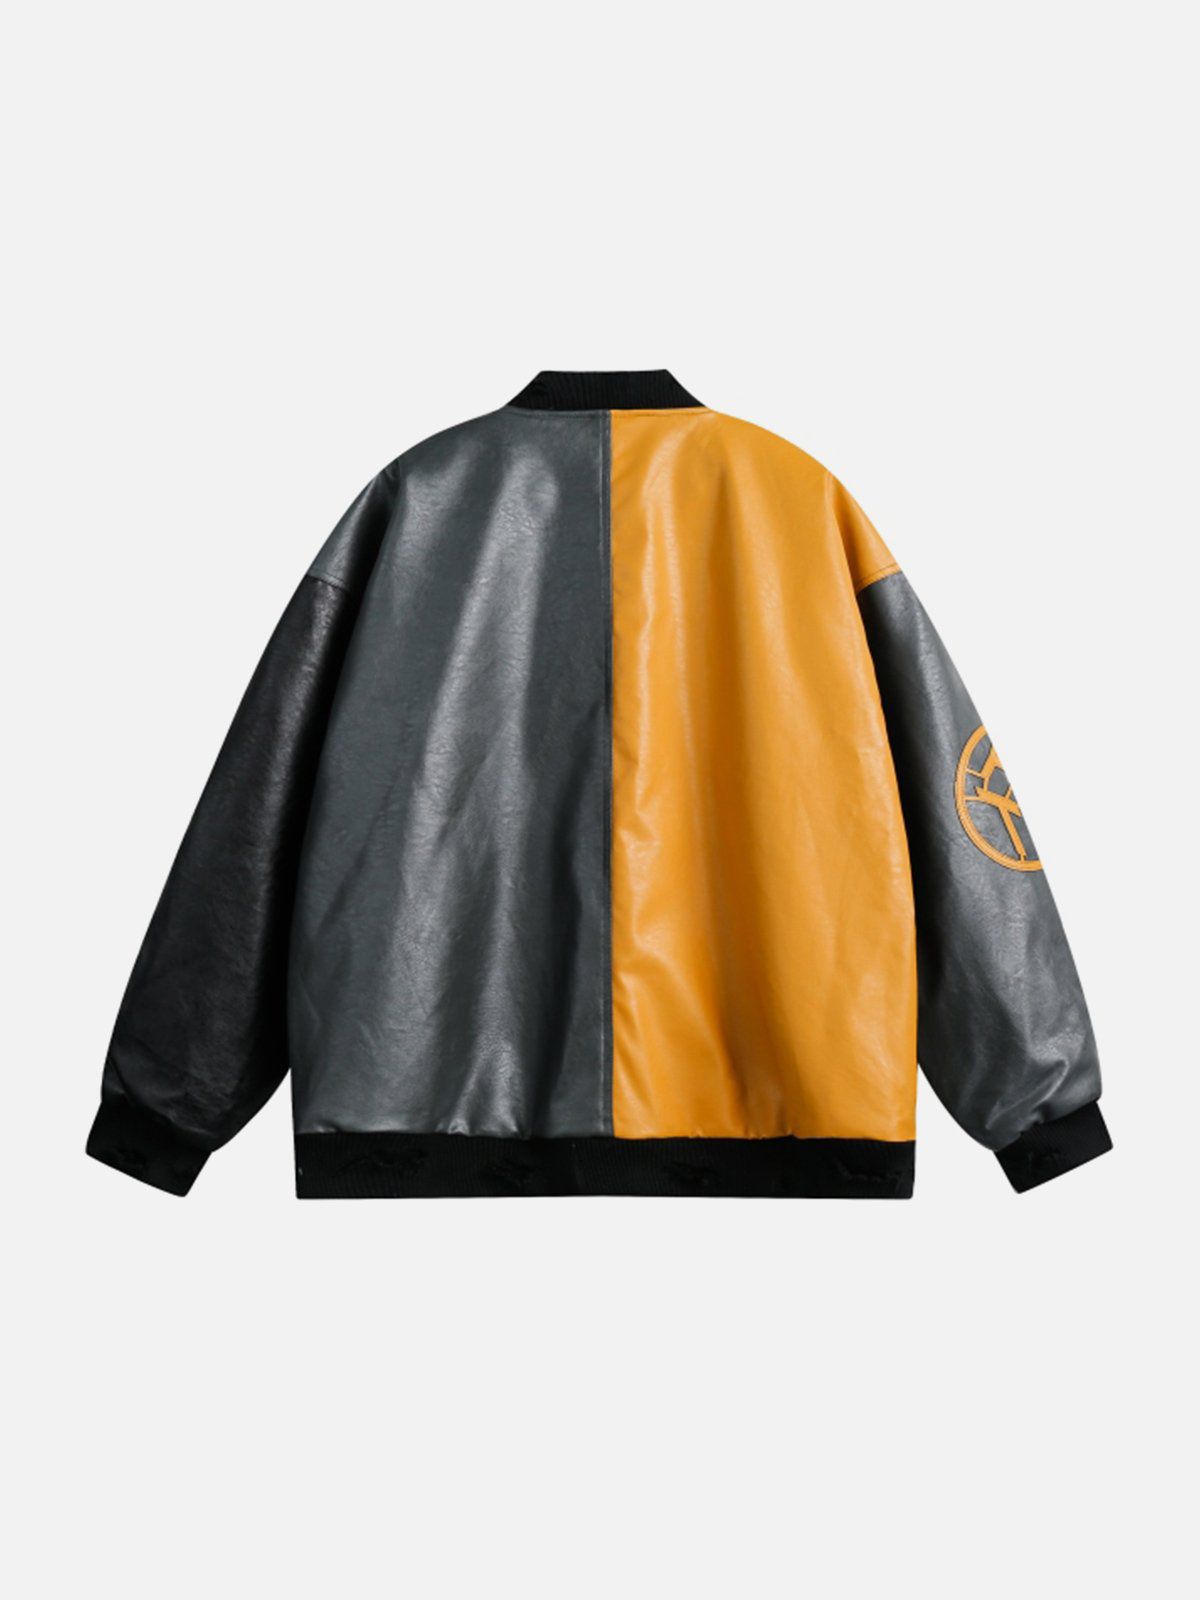 Majesda® - Vintage Contrast Leather Jacket outfit ideas, streetwear fashion - majesda.com